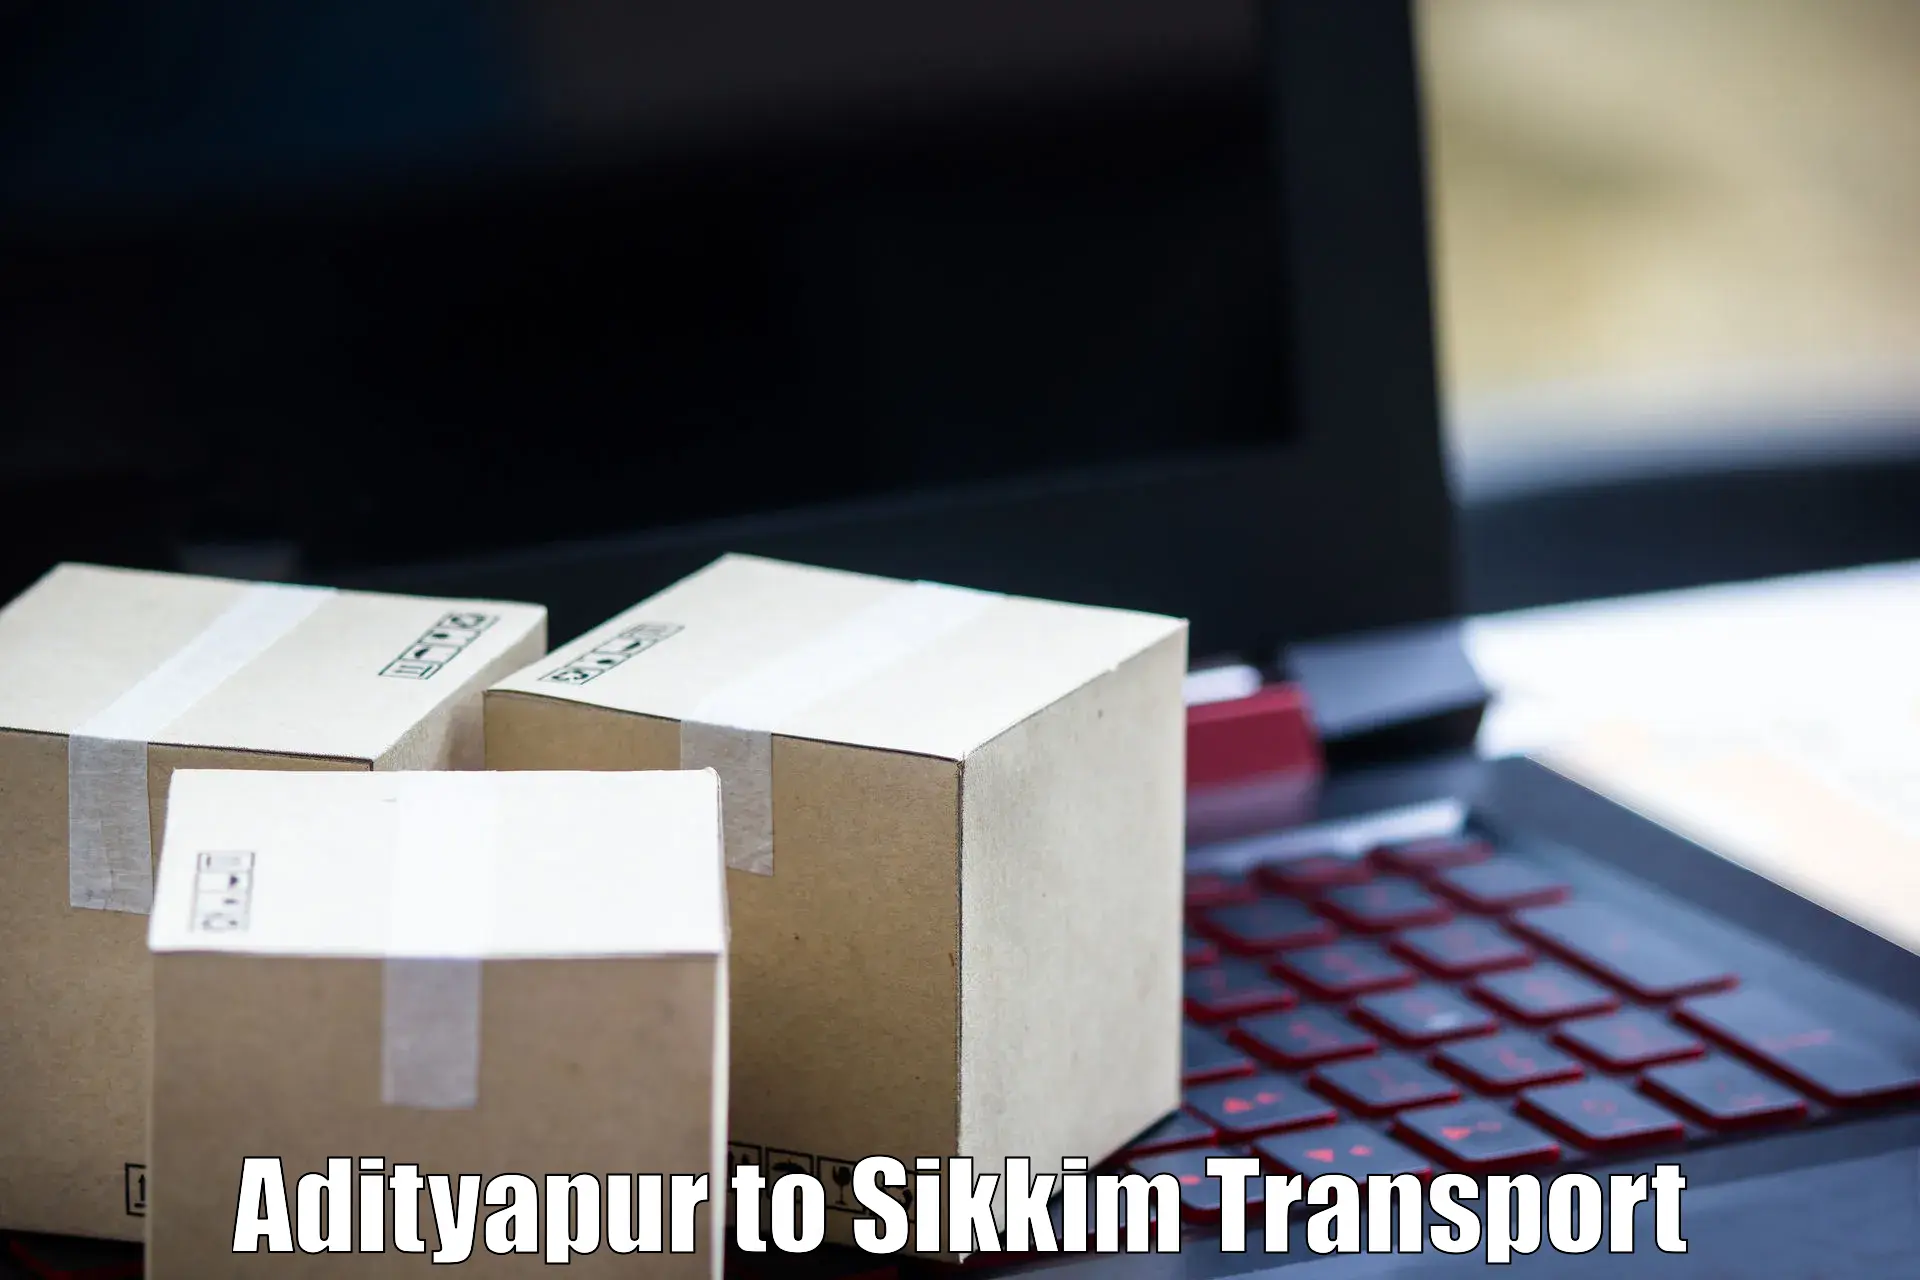 Online transport service Adityapur to Pelling